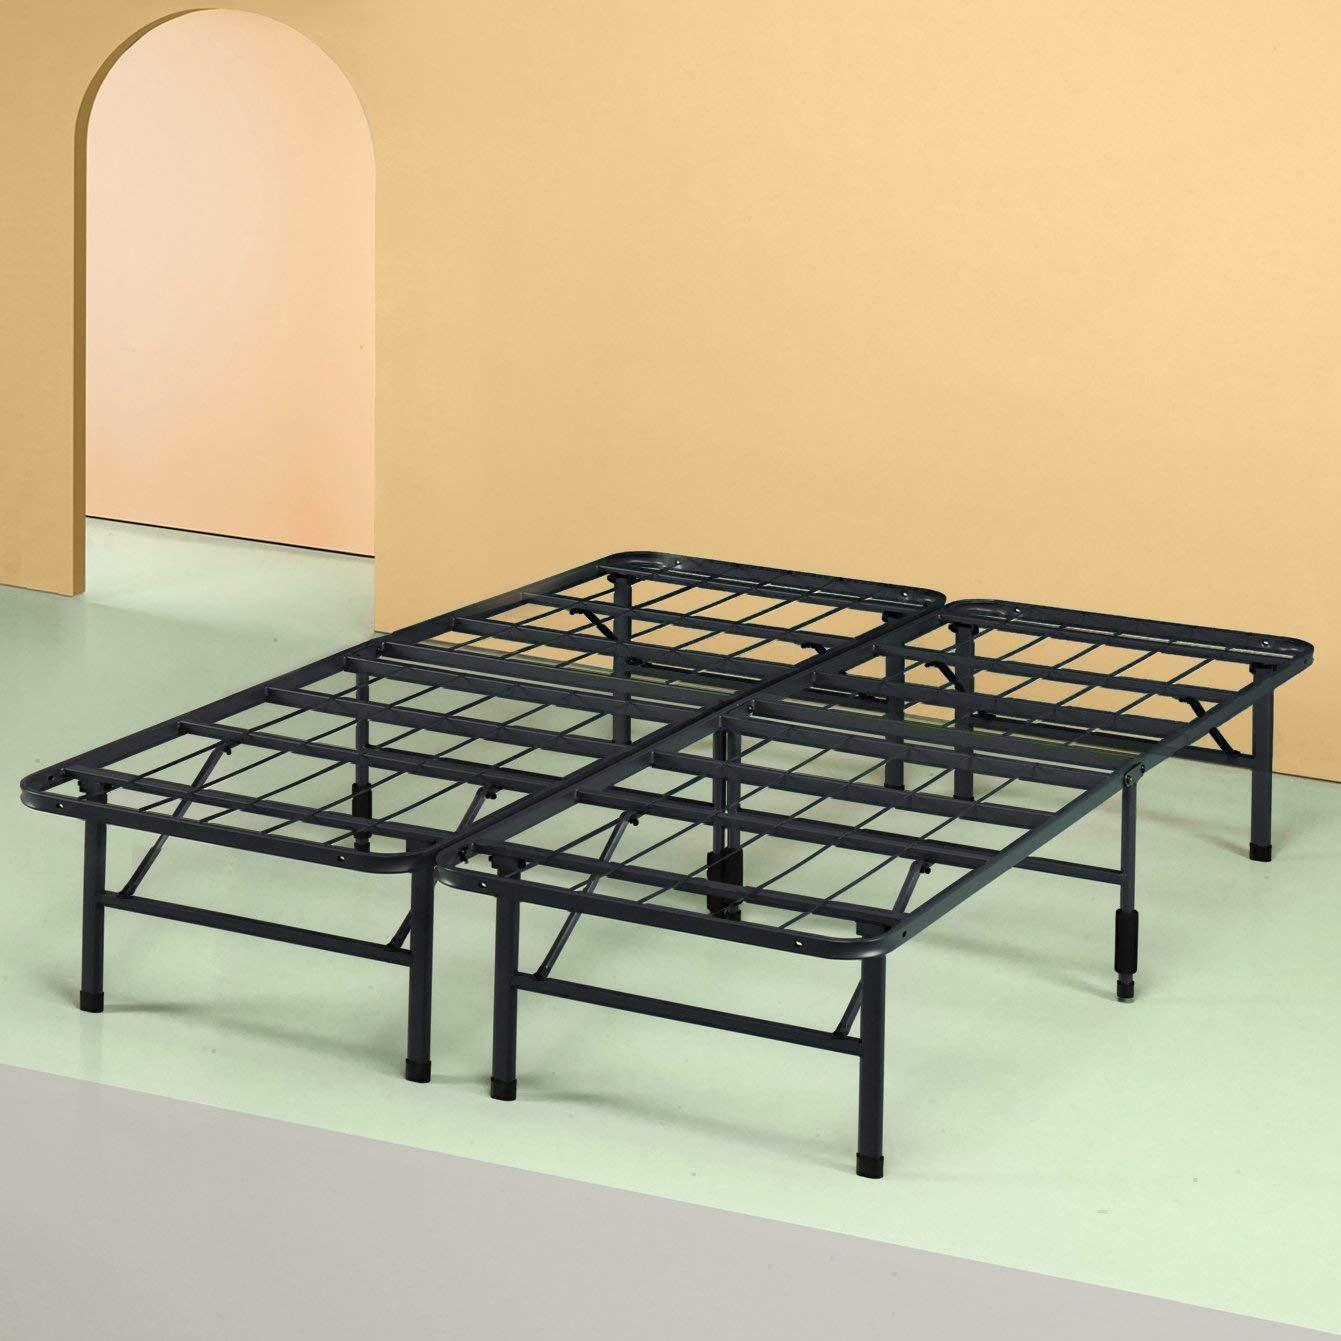 19 Best Metal Bed Frames 2020 The, Metal Box Bed Frame